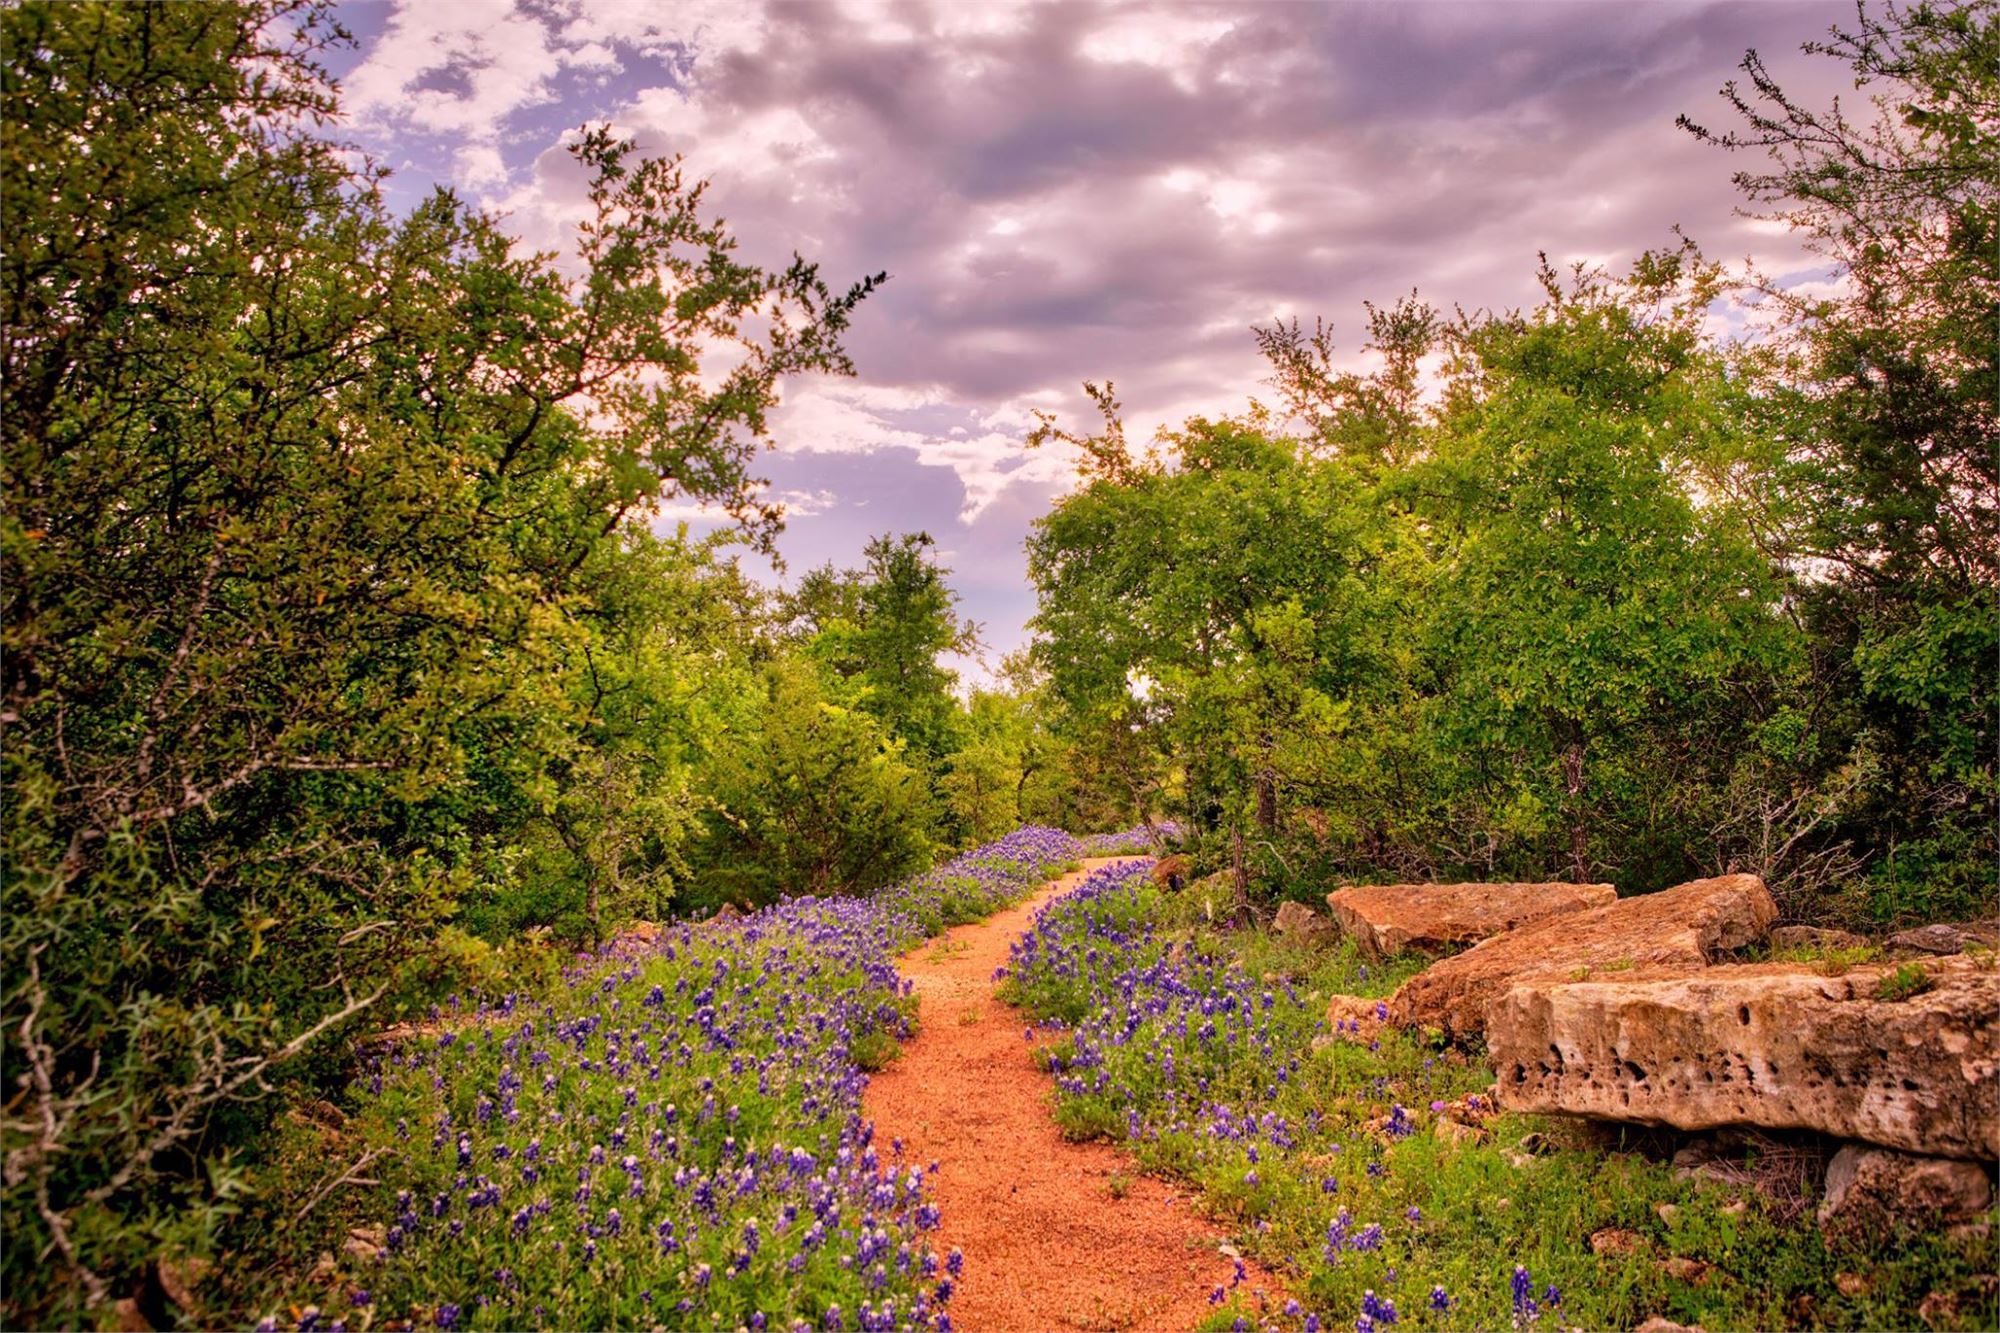 Wildflowers — Texas Parks & Wildlife Department